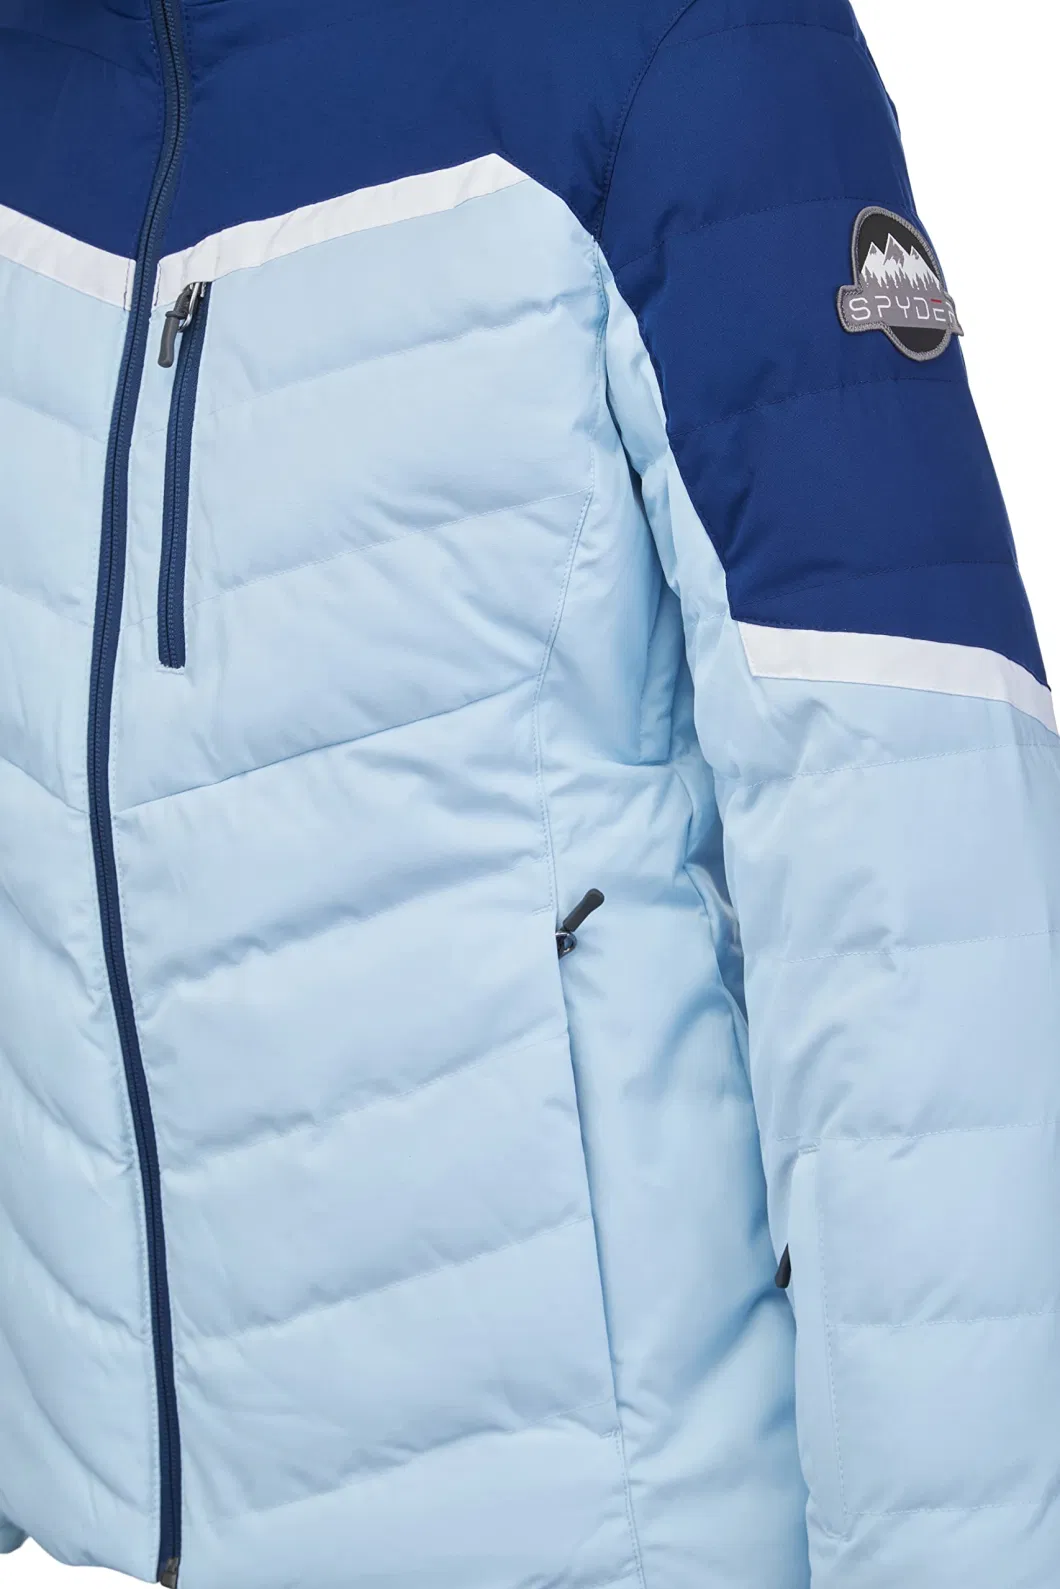 Asiapo China Factory Women&prime;s Winter Stylish Fashion Insulated Down Ski Snow Jacket